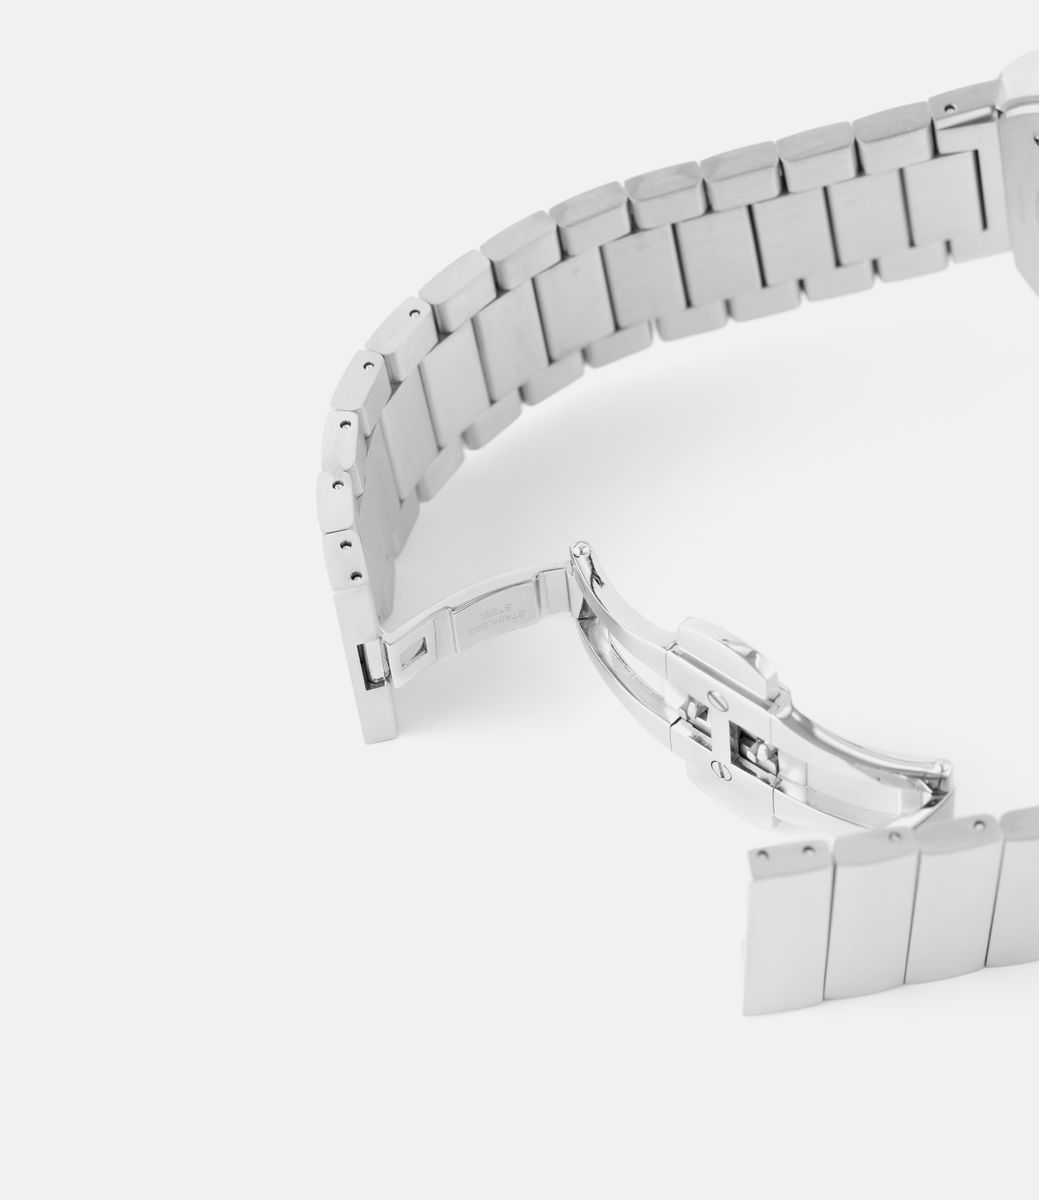 22 Studio Automatic Sport Leed Gray — часы с циферблатом из бетона (45 мм)